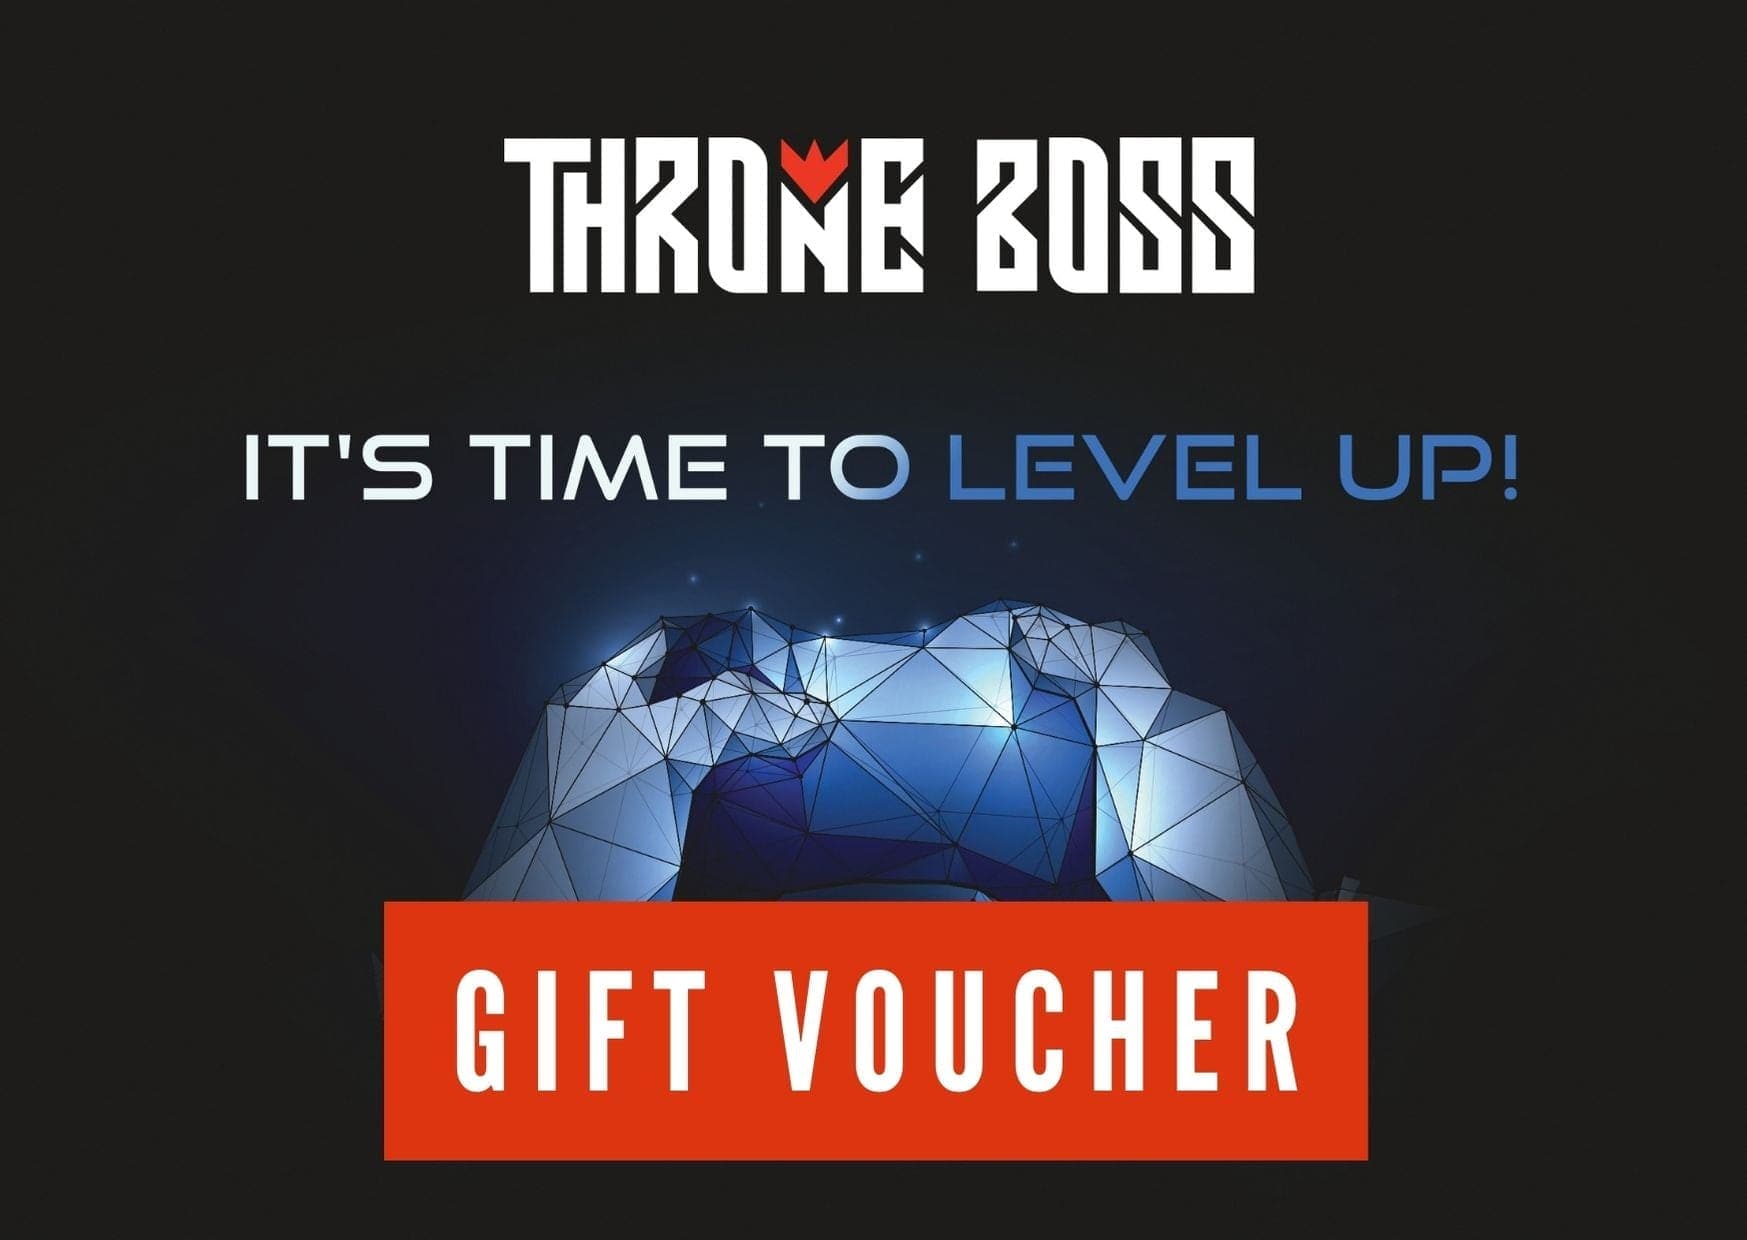 Throne Boss Gift Card - Throne Boss Australia